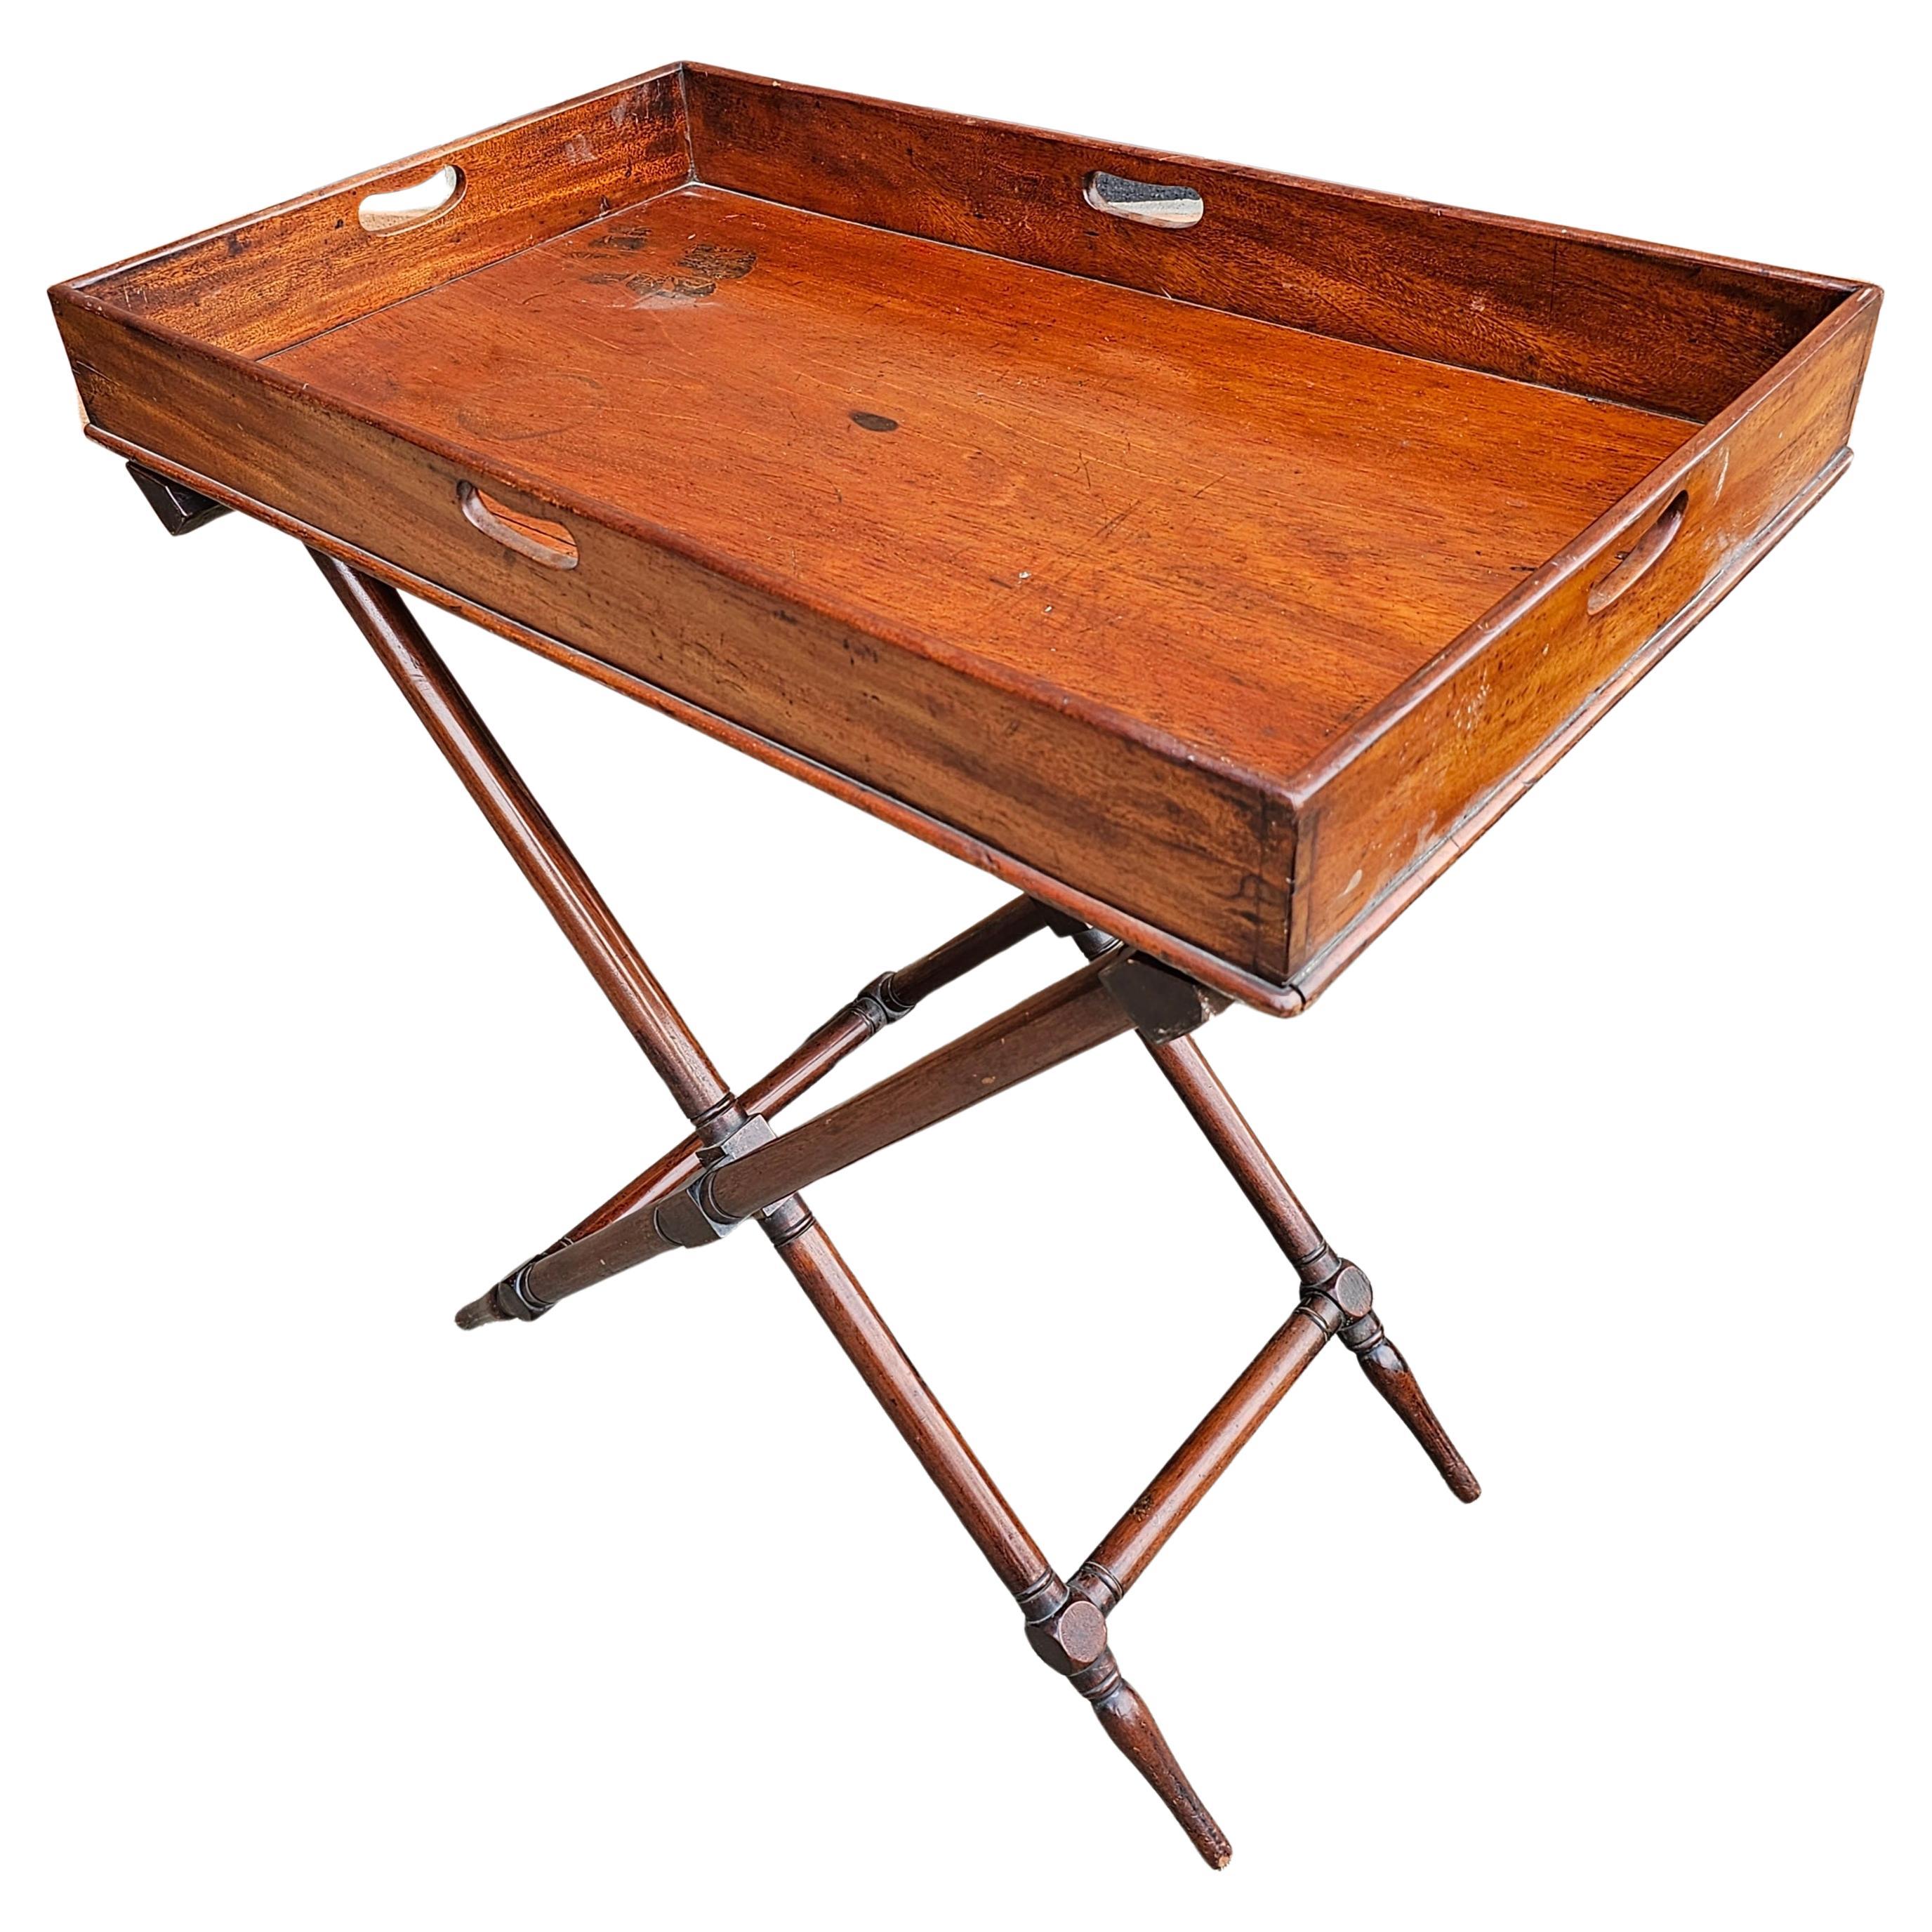 19th Century English Mahogany Butler's folding Tray Table. Newer Base 
Measures 32